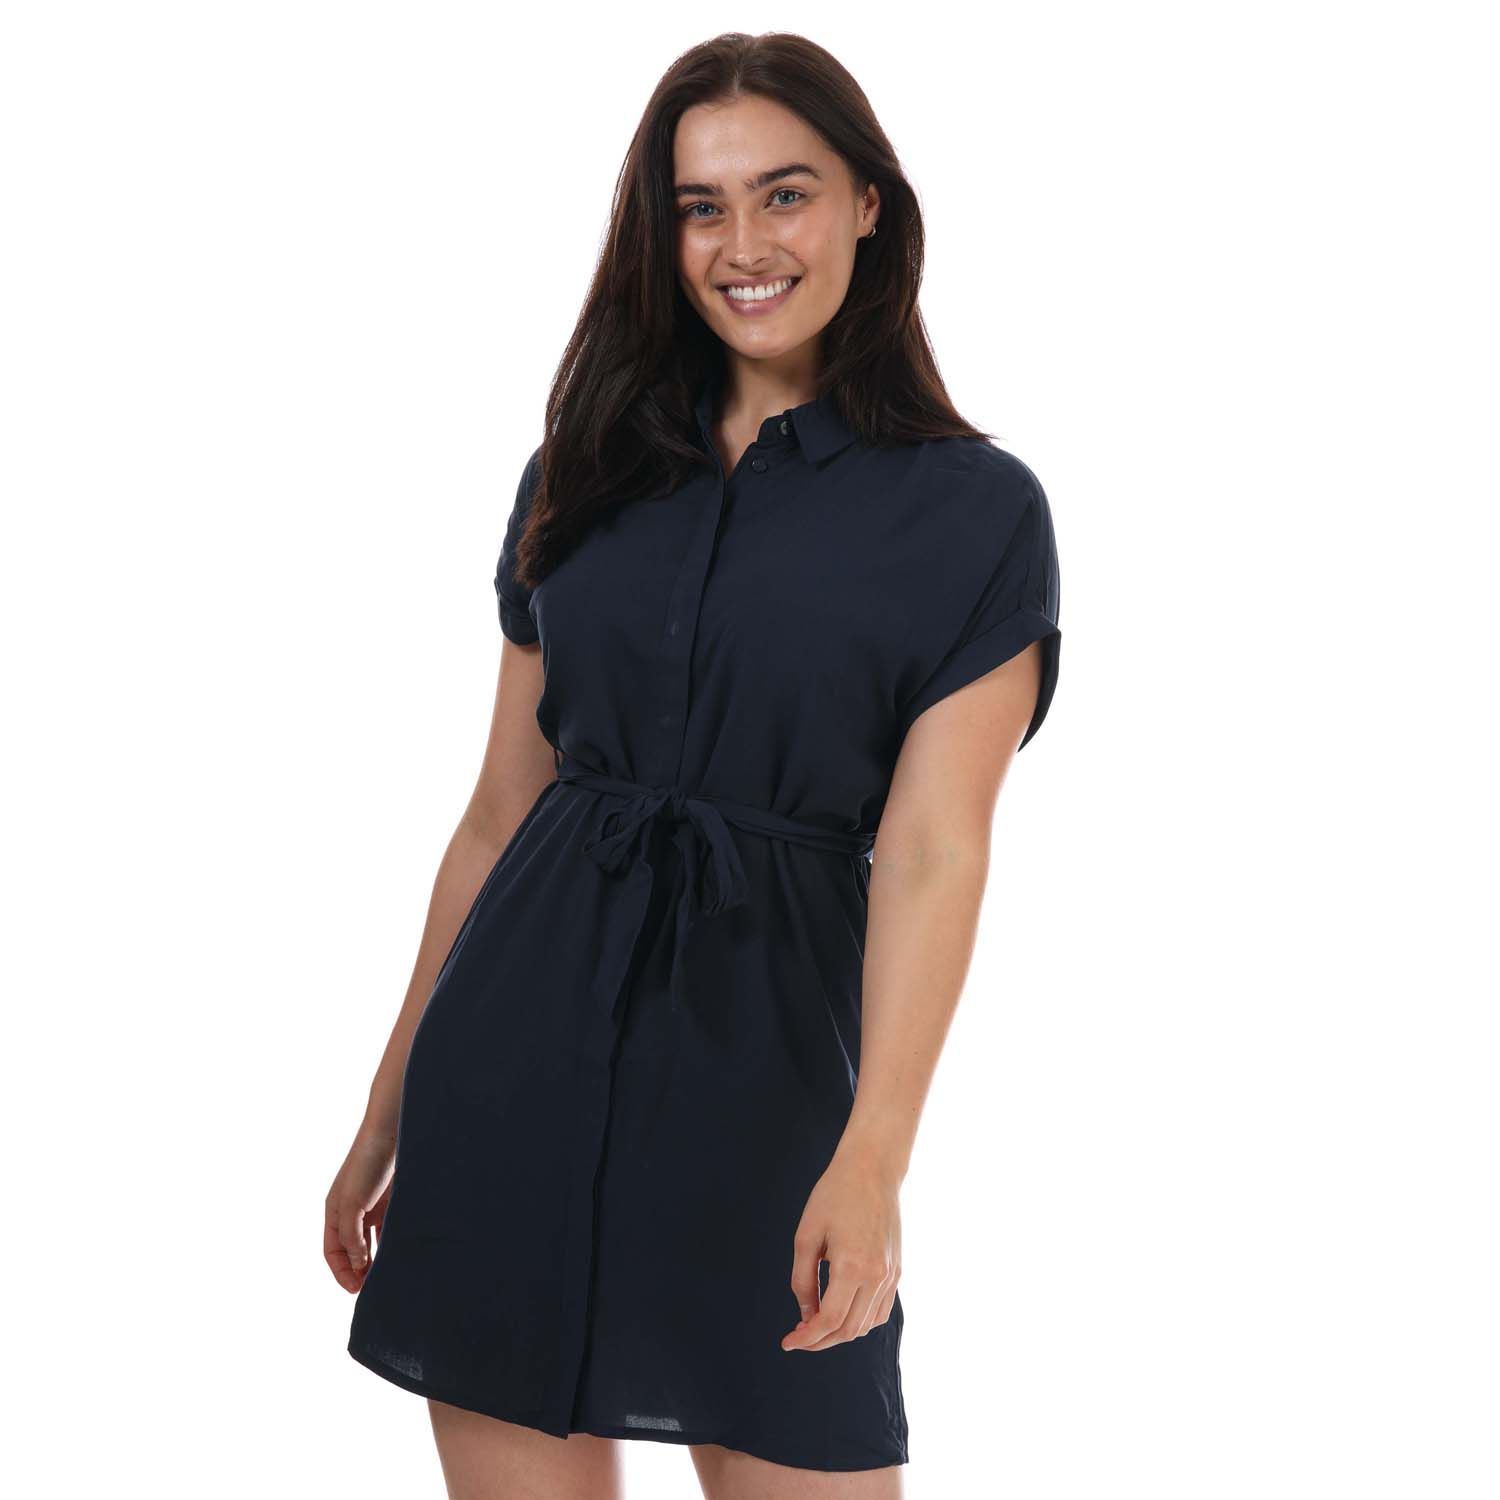 Womens Vero Moda Easy SS Shirt Dress in navy.- Shirt collar.- Hidden button closure.- Turn up details at the sleeves.- Belt at the waist.- Soft viscose material.- Regular fit.- Body: 100% Viscose.- Ref: 10245163A